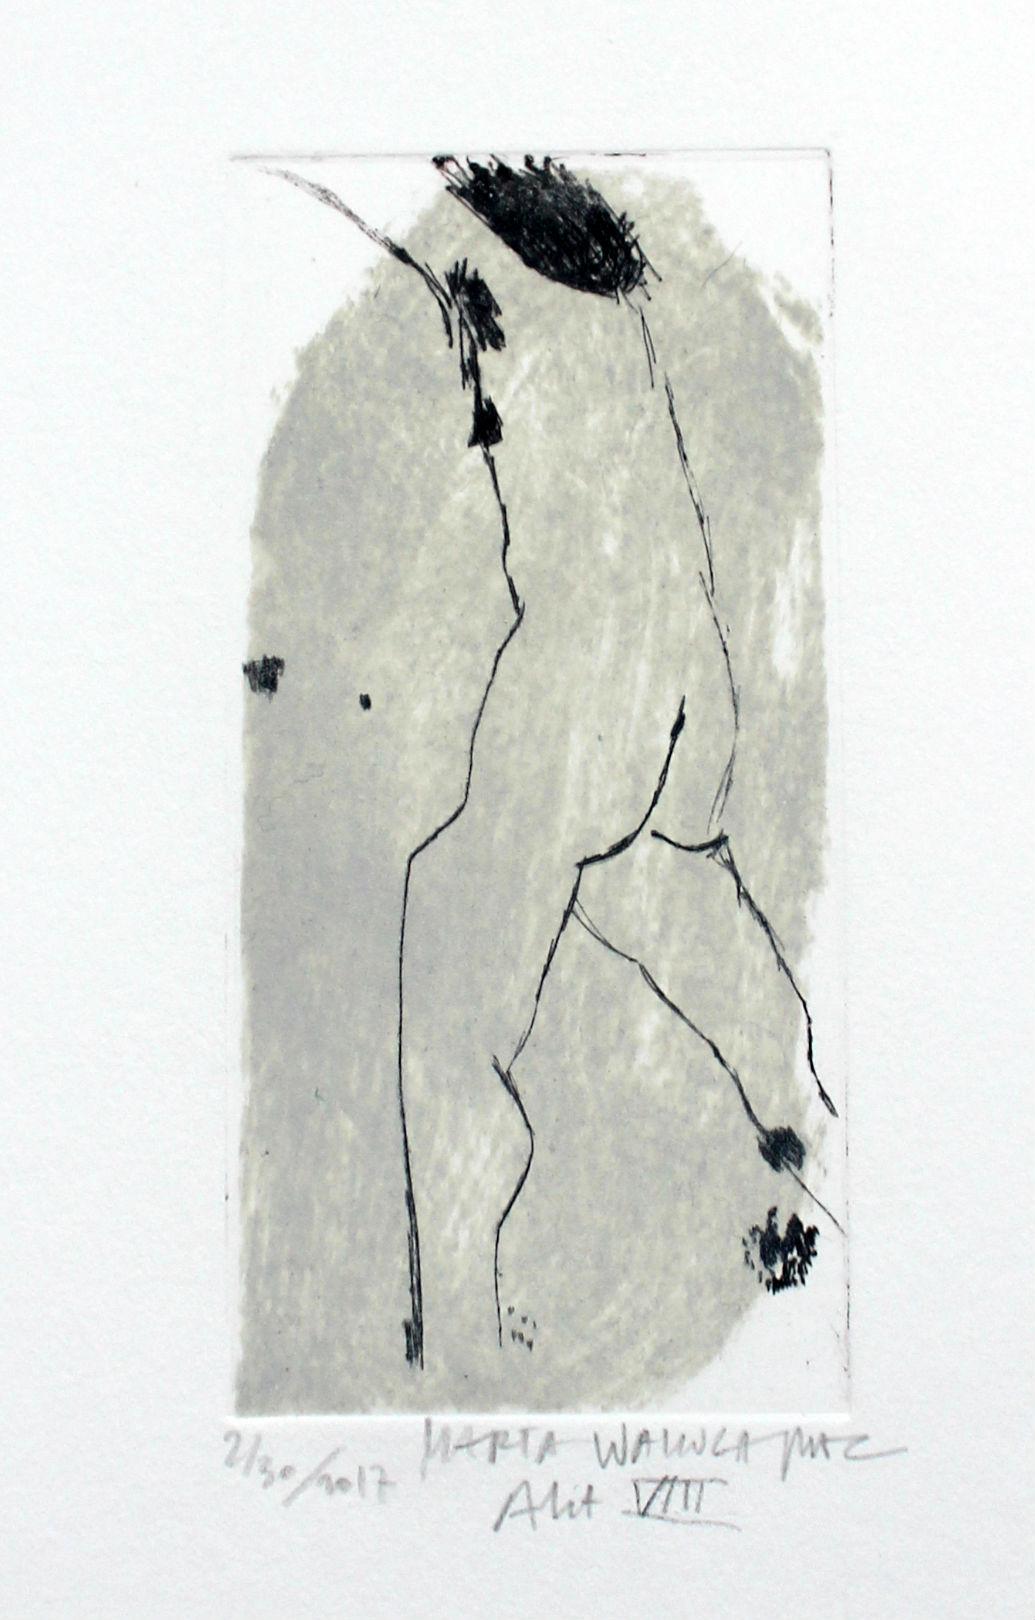 Marta Wakula-Mac Nude Print - Nude VIII - XXI Century, Contemporary Figurative Drypoint Etching Print